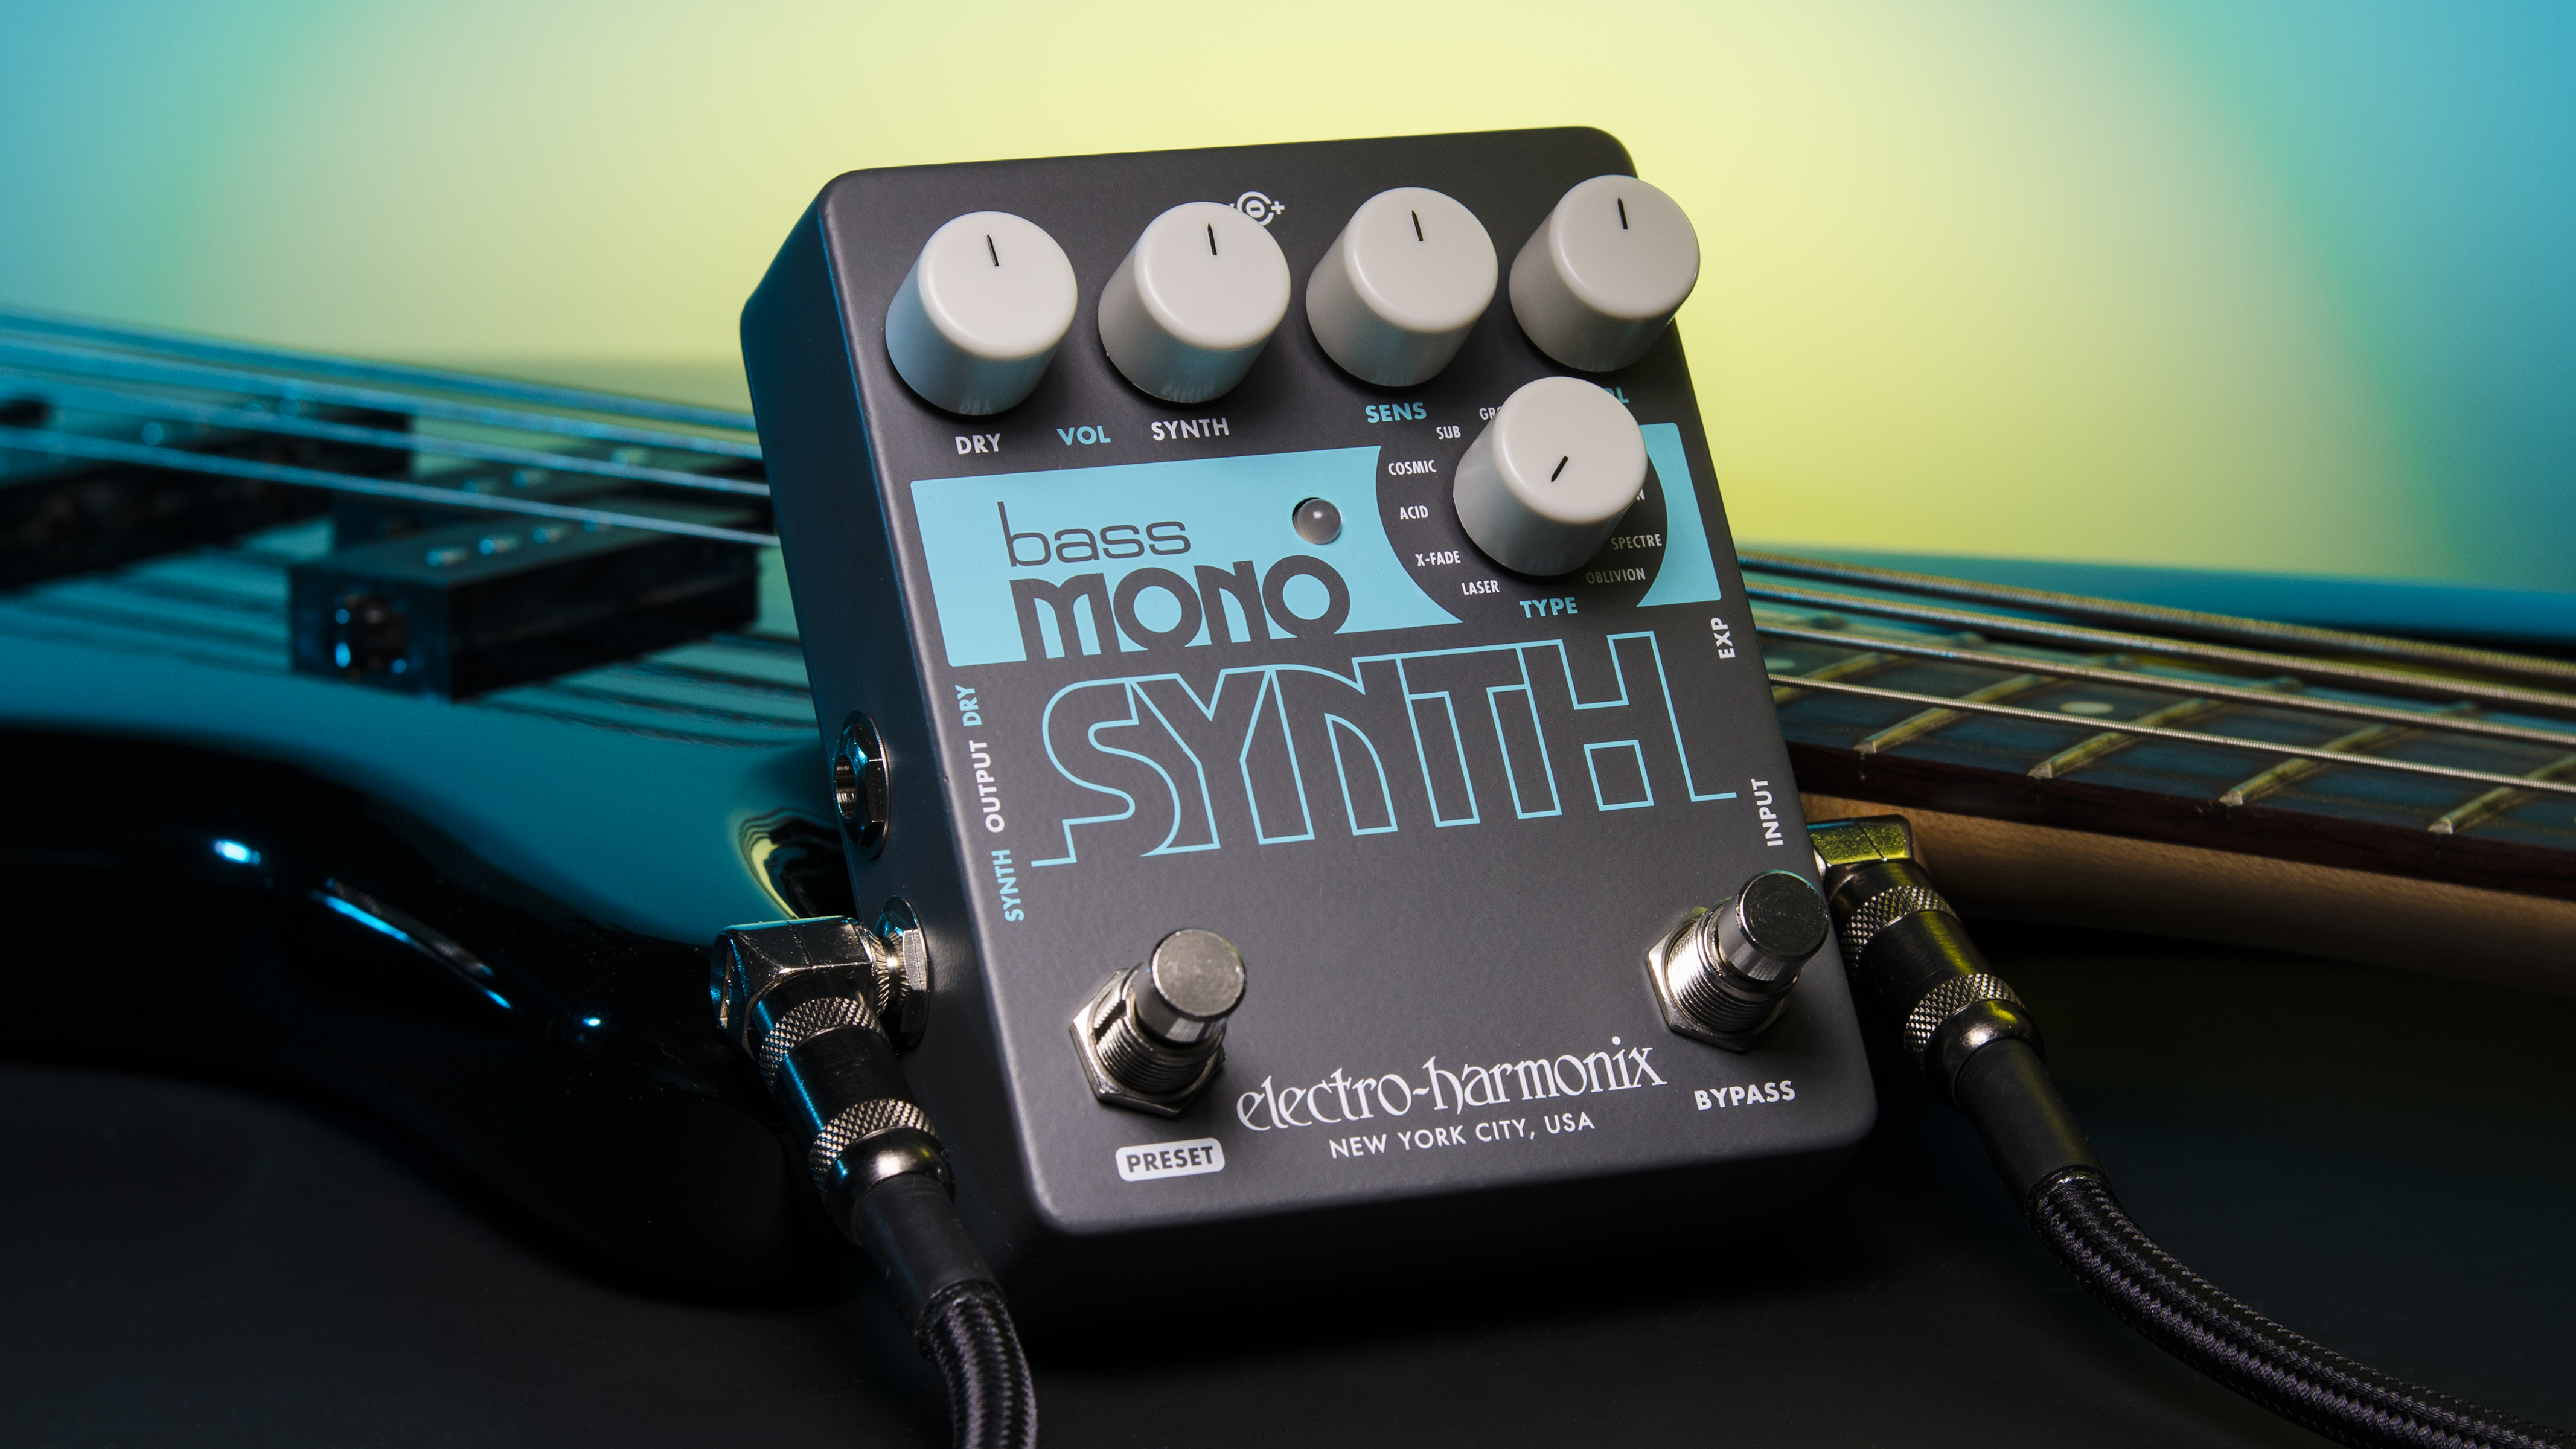 Bass Mono Synth | electro-harmonix -国内公式サイト-